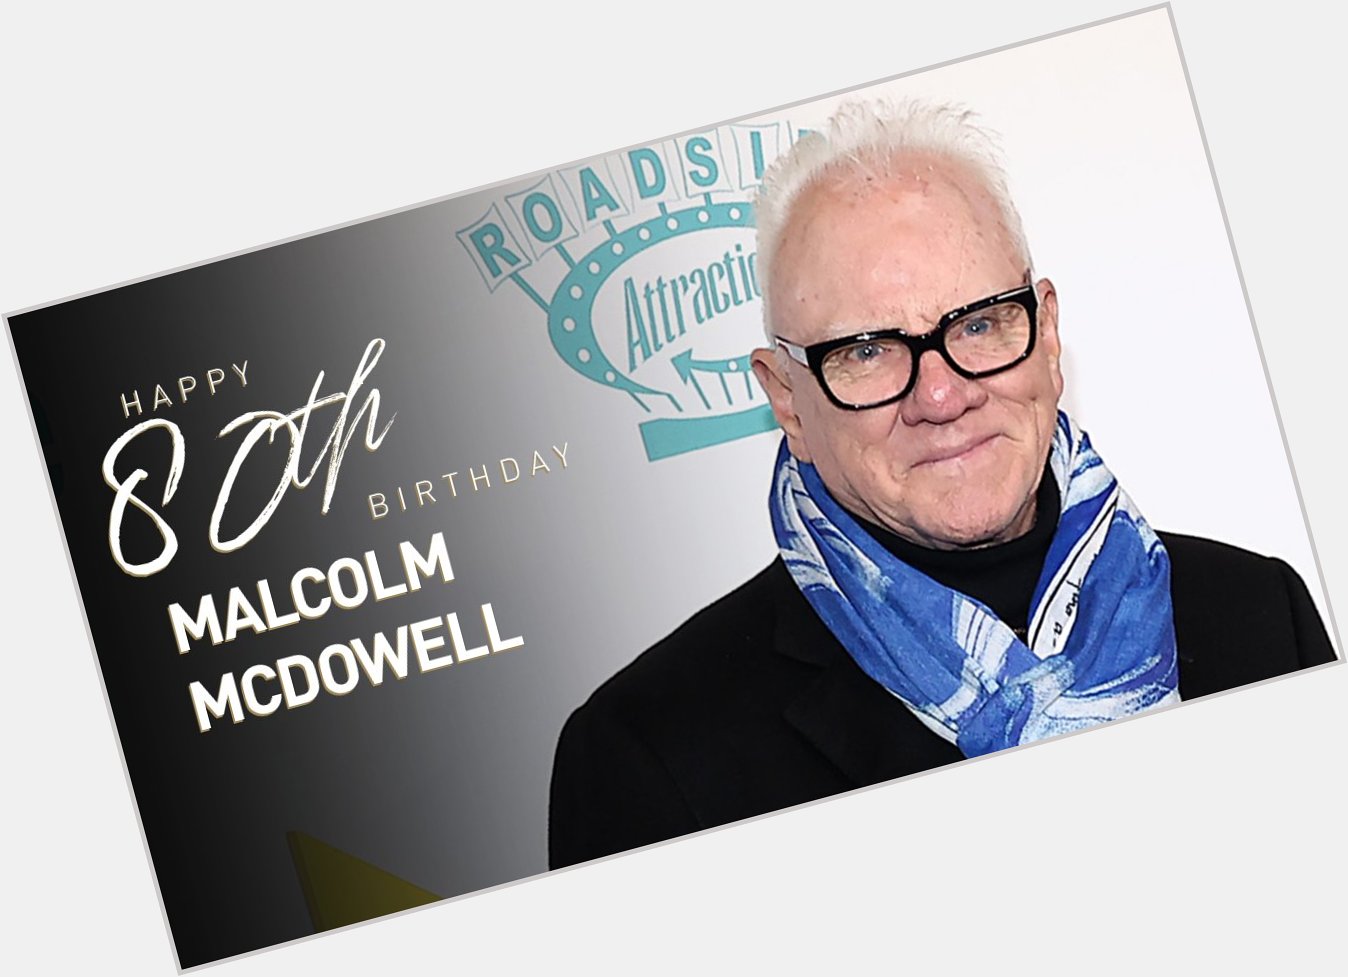 Happy 80th birthday Malcolm McDowell!

Read his bio here:  